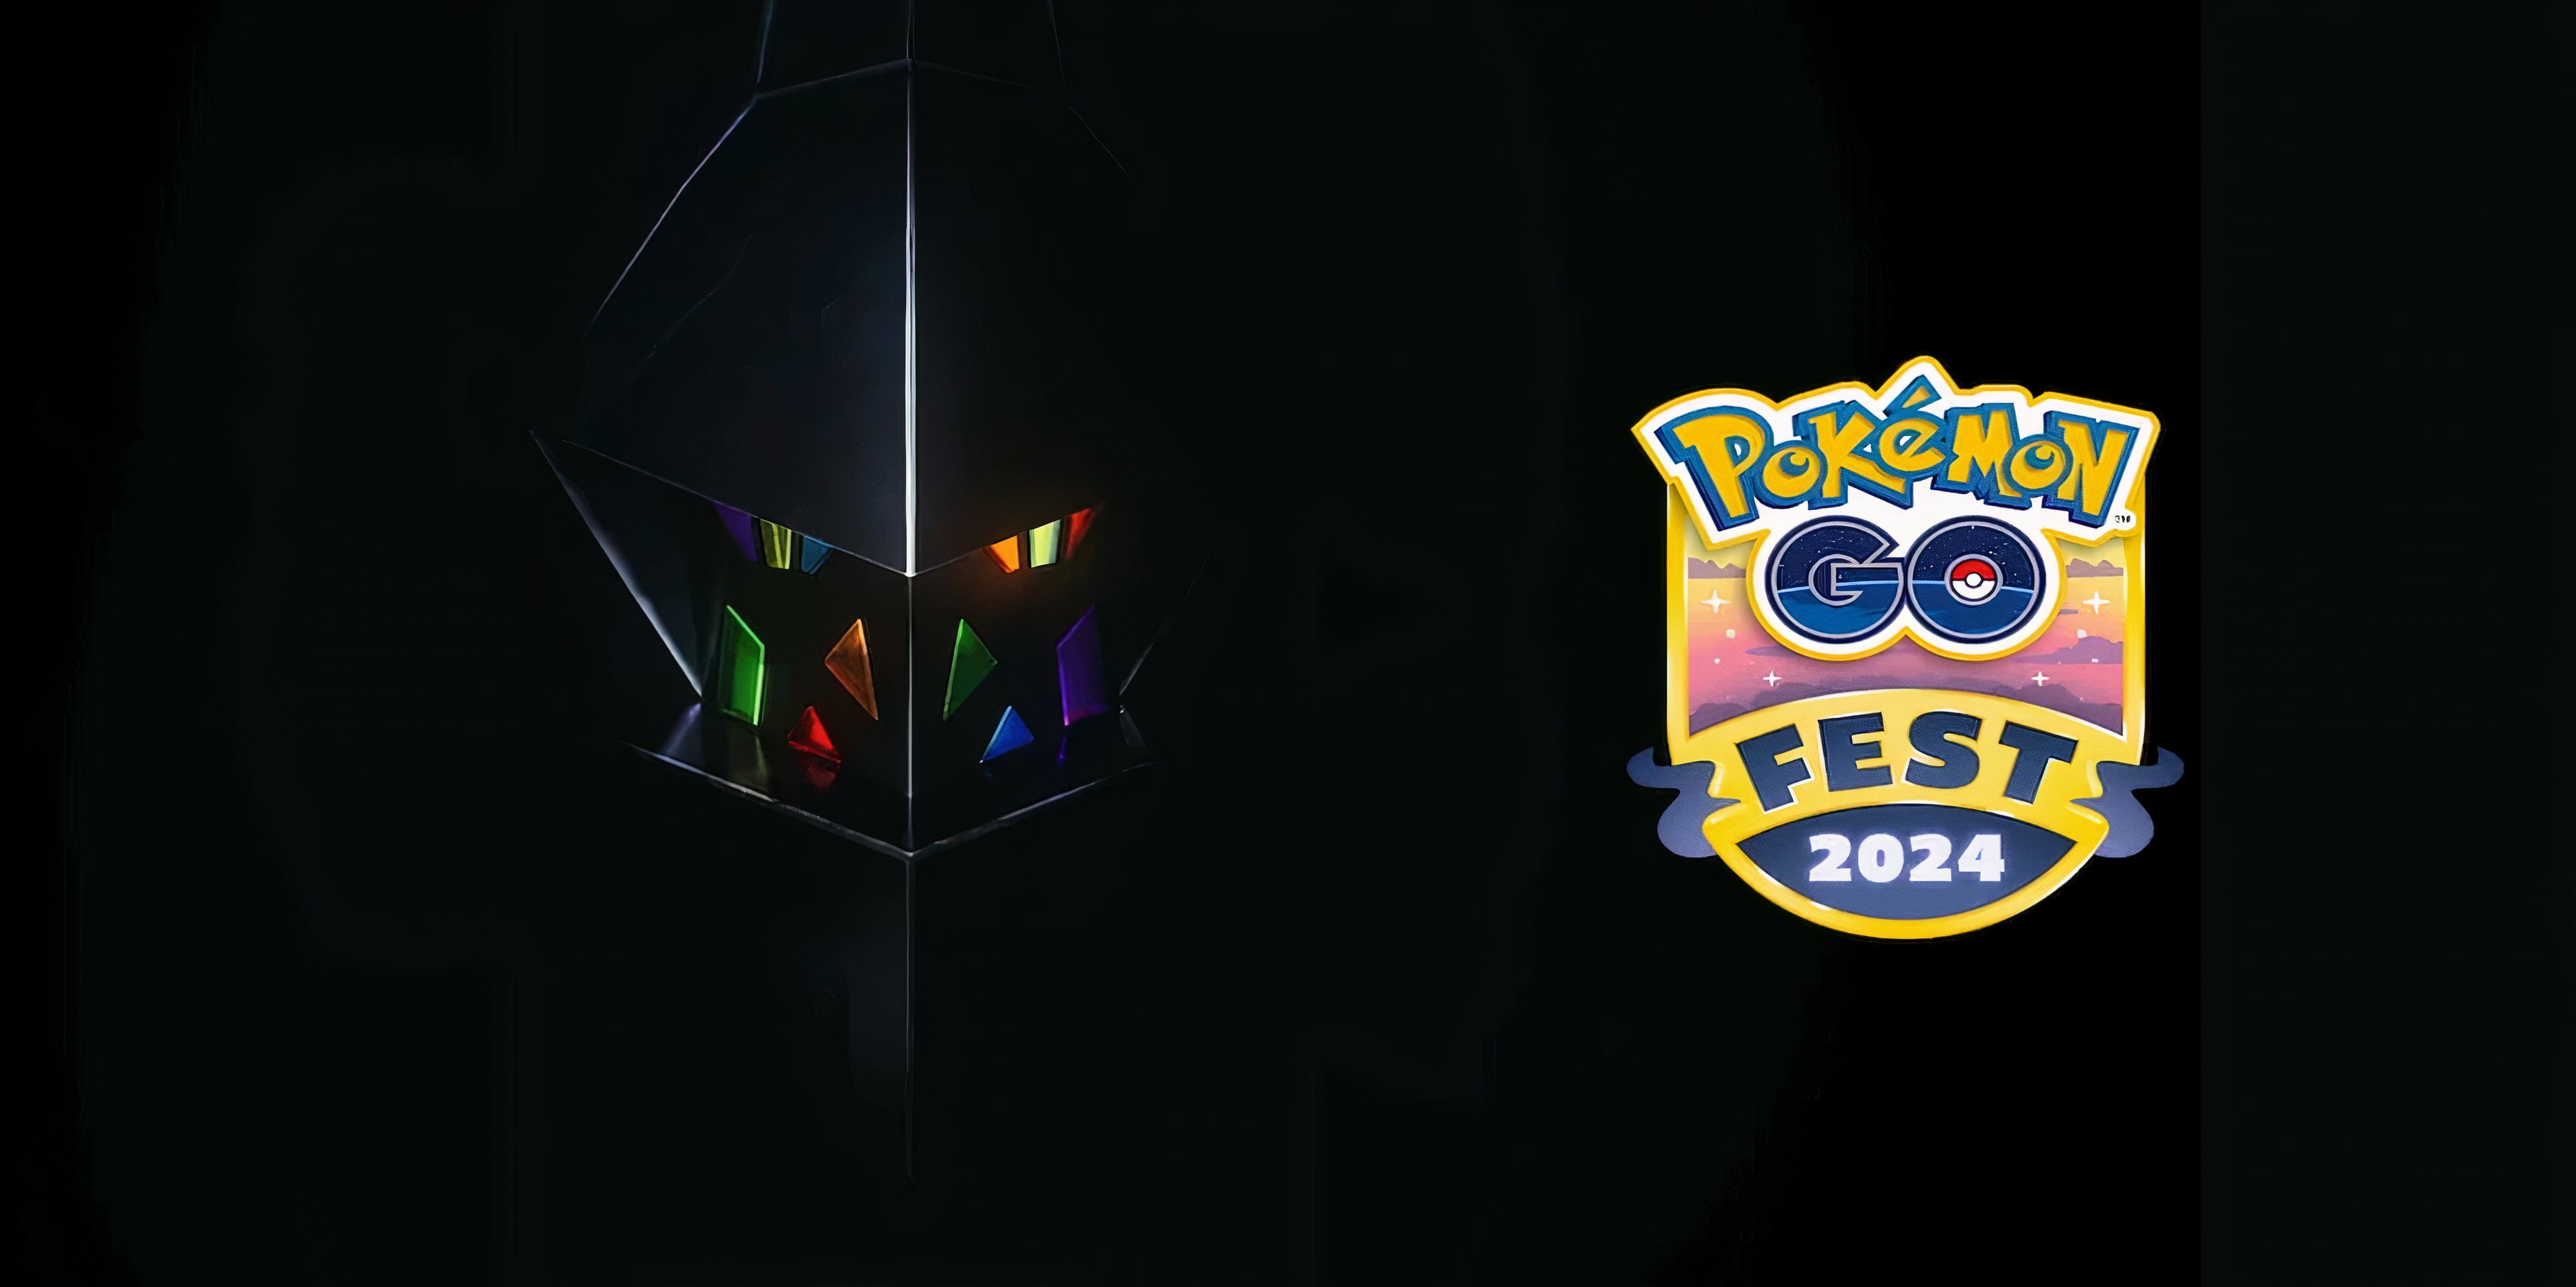 pokemon go fest 2024 madrid collection challenges